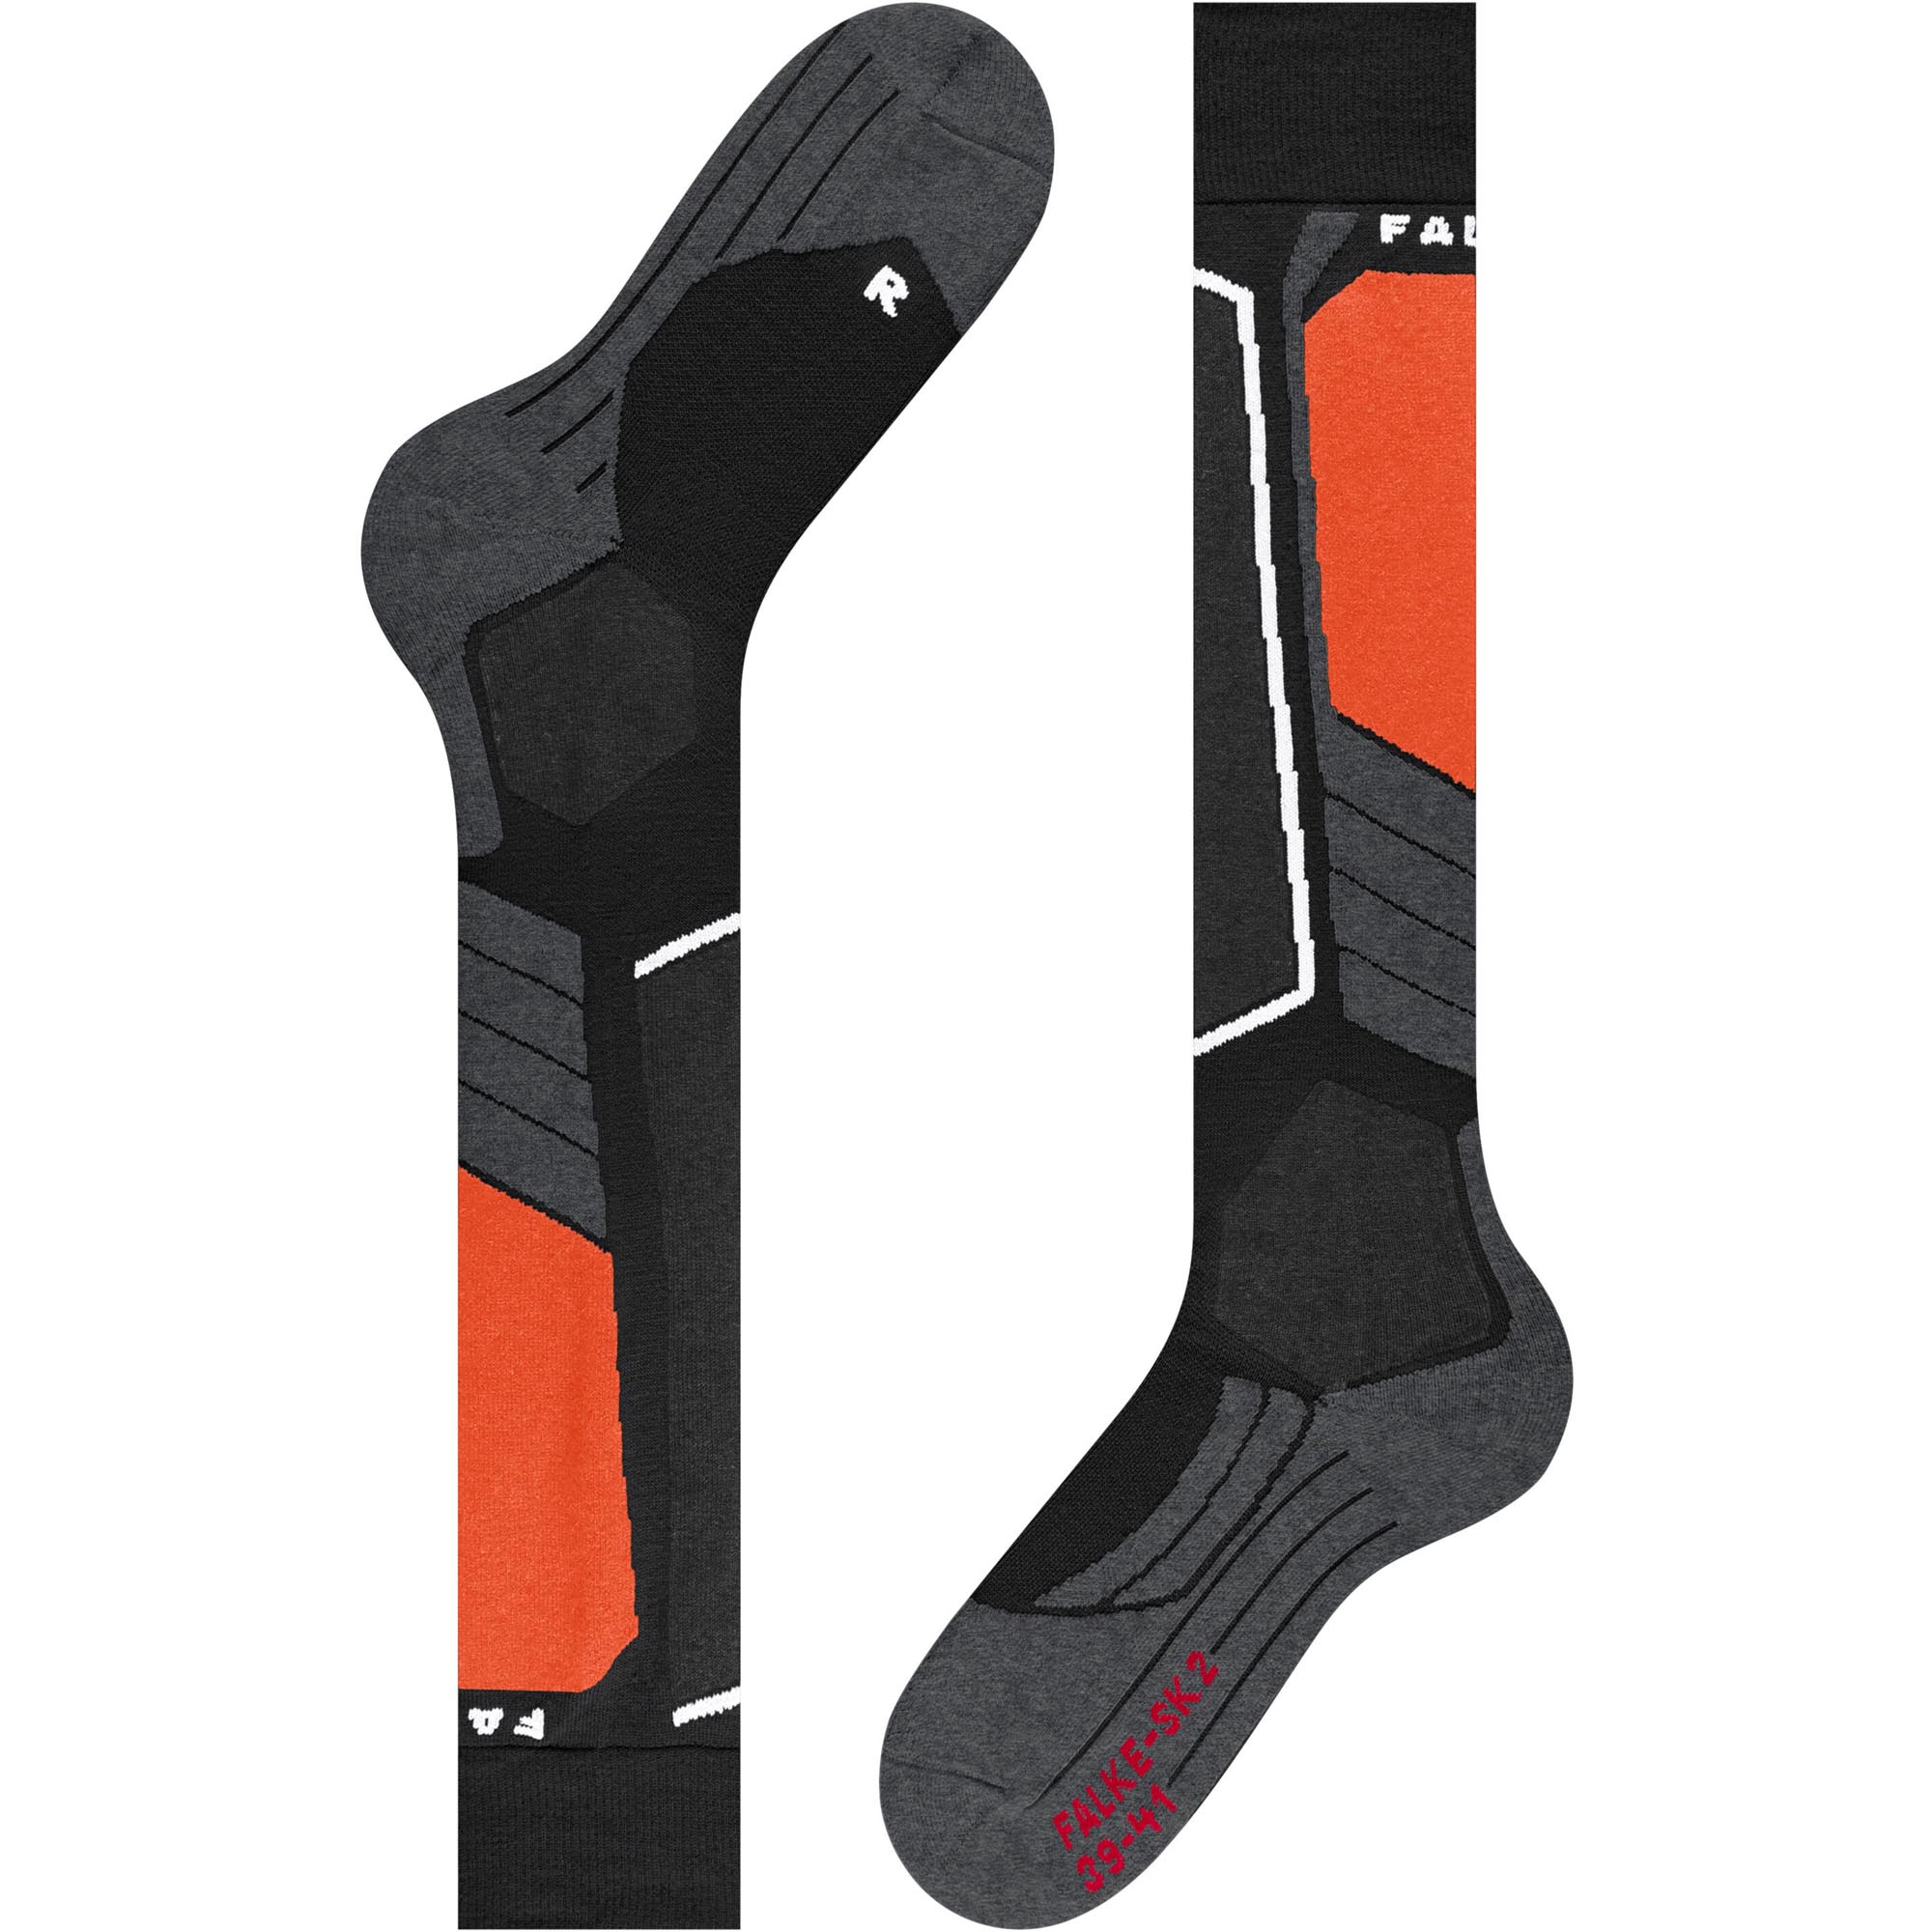 Falke SK2 Merino Wool Ski Socks